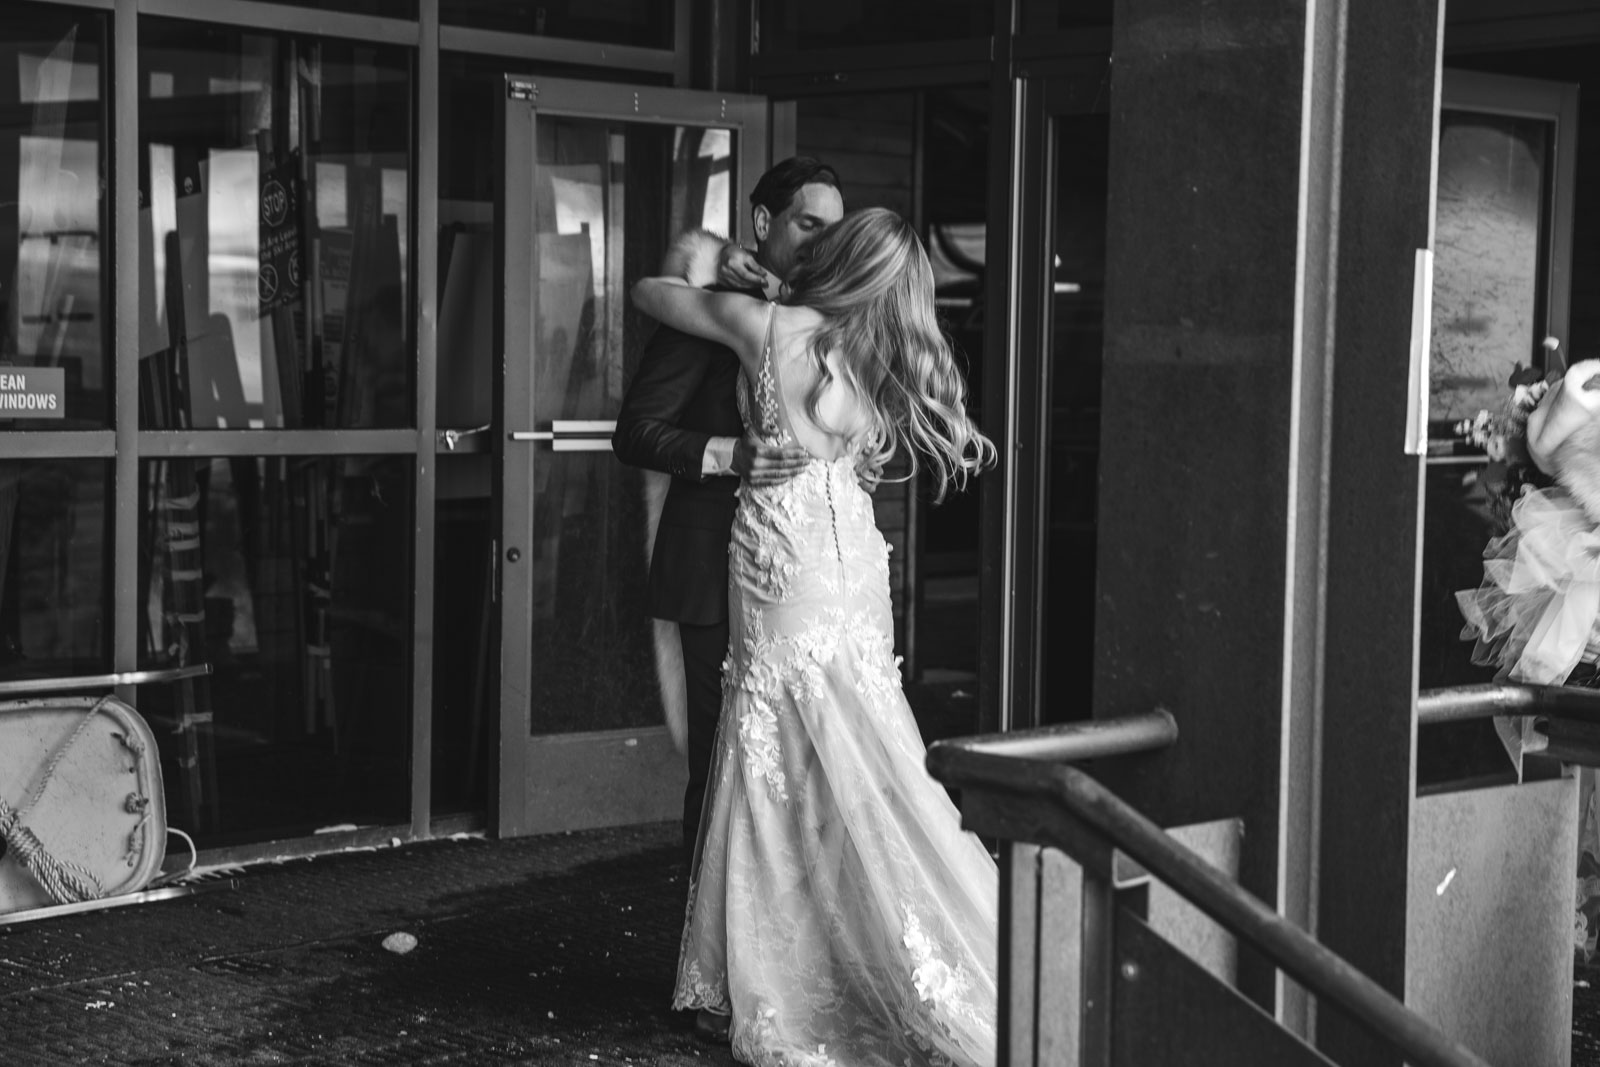 Bride embraces, kisses groom after ceremony